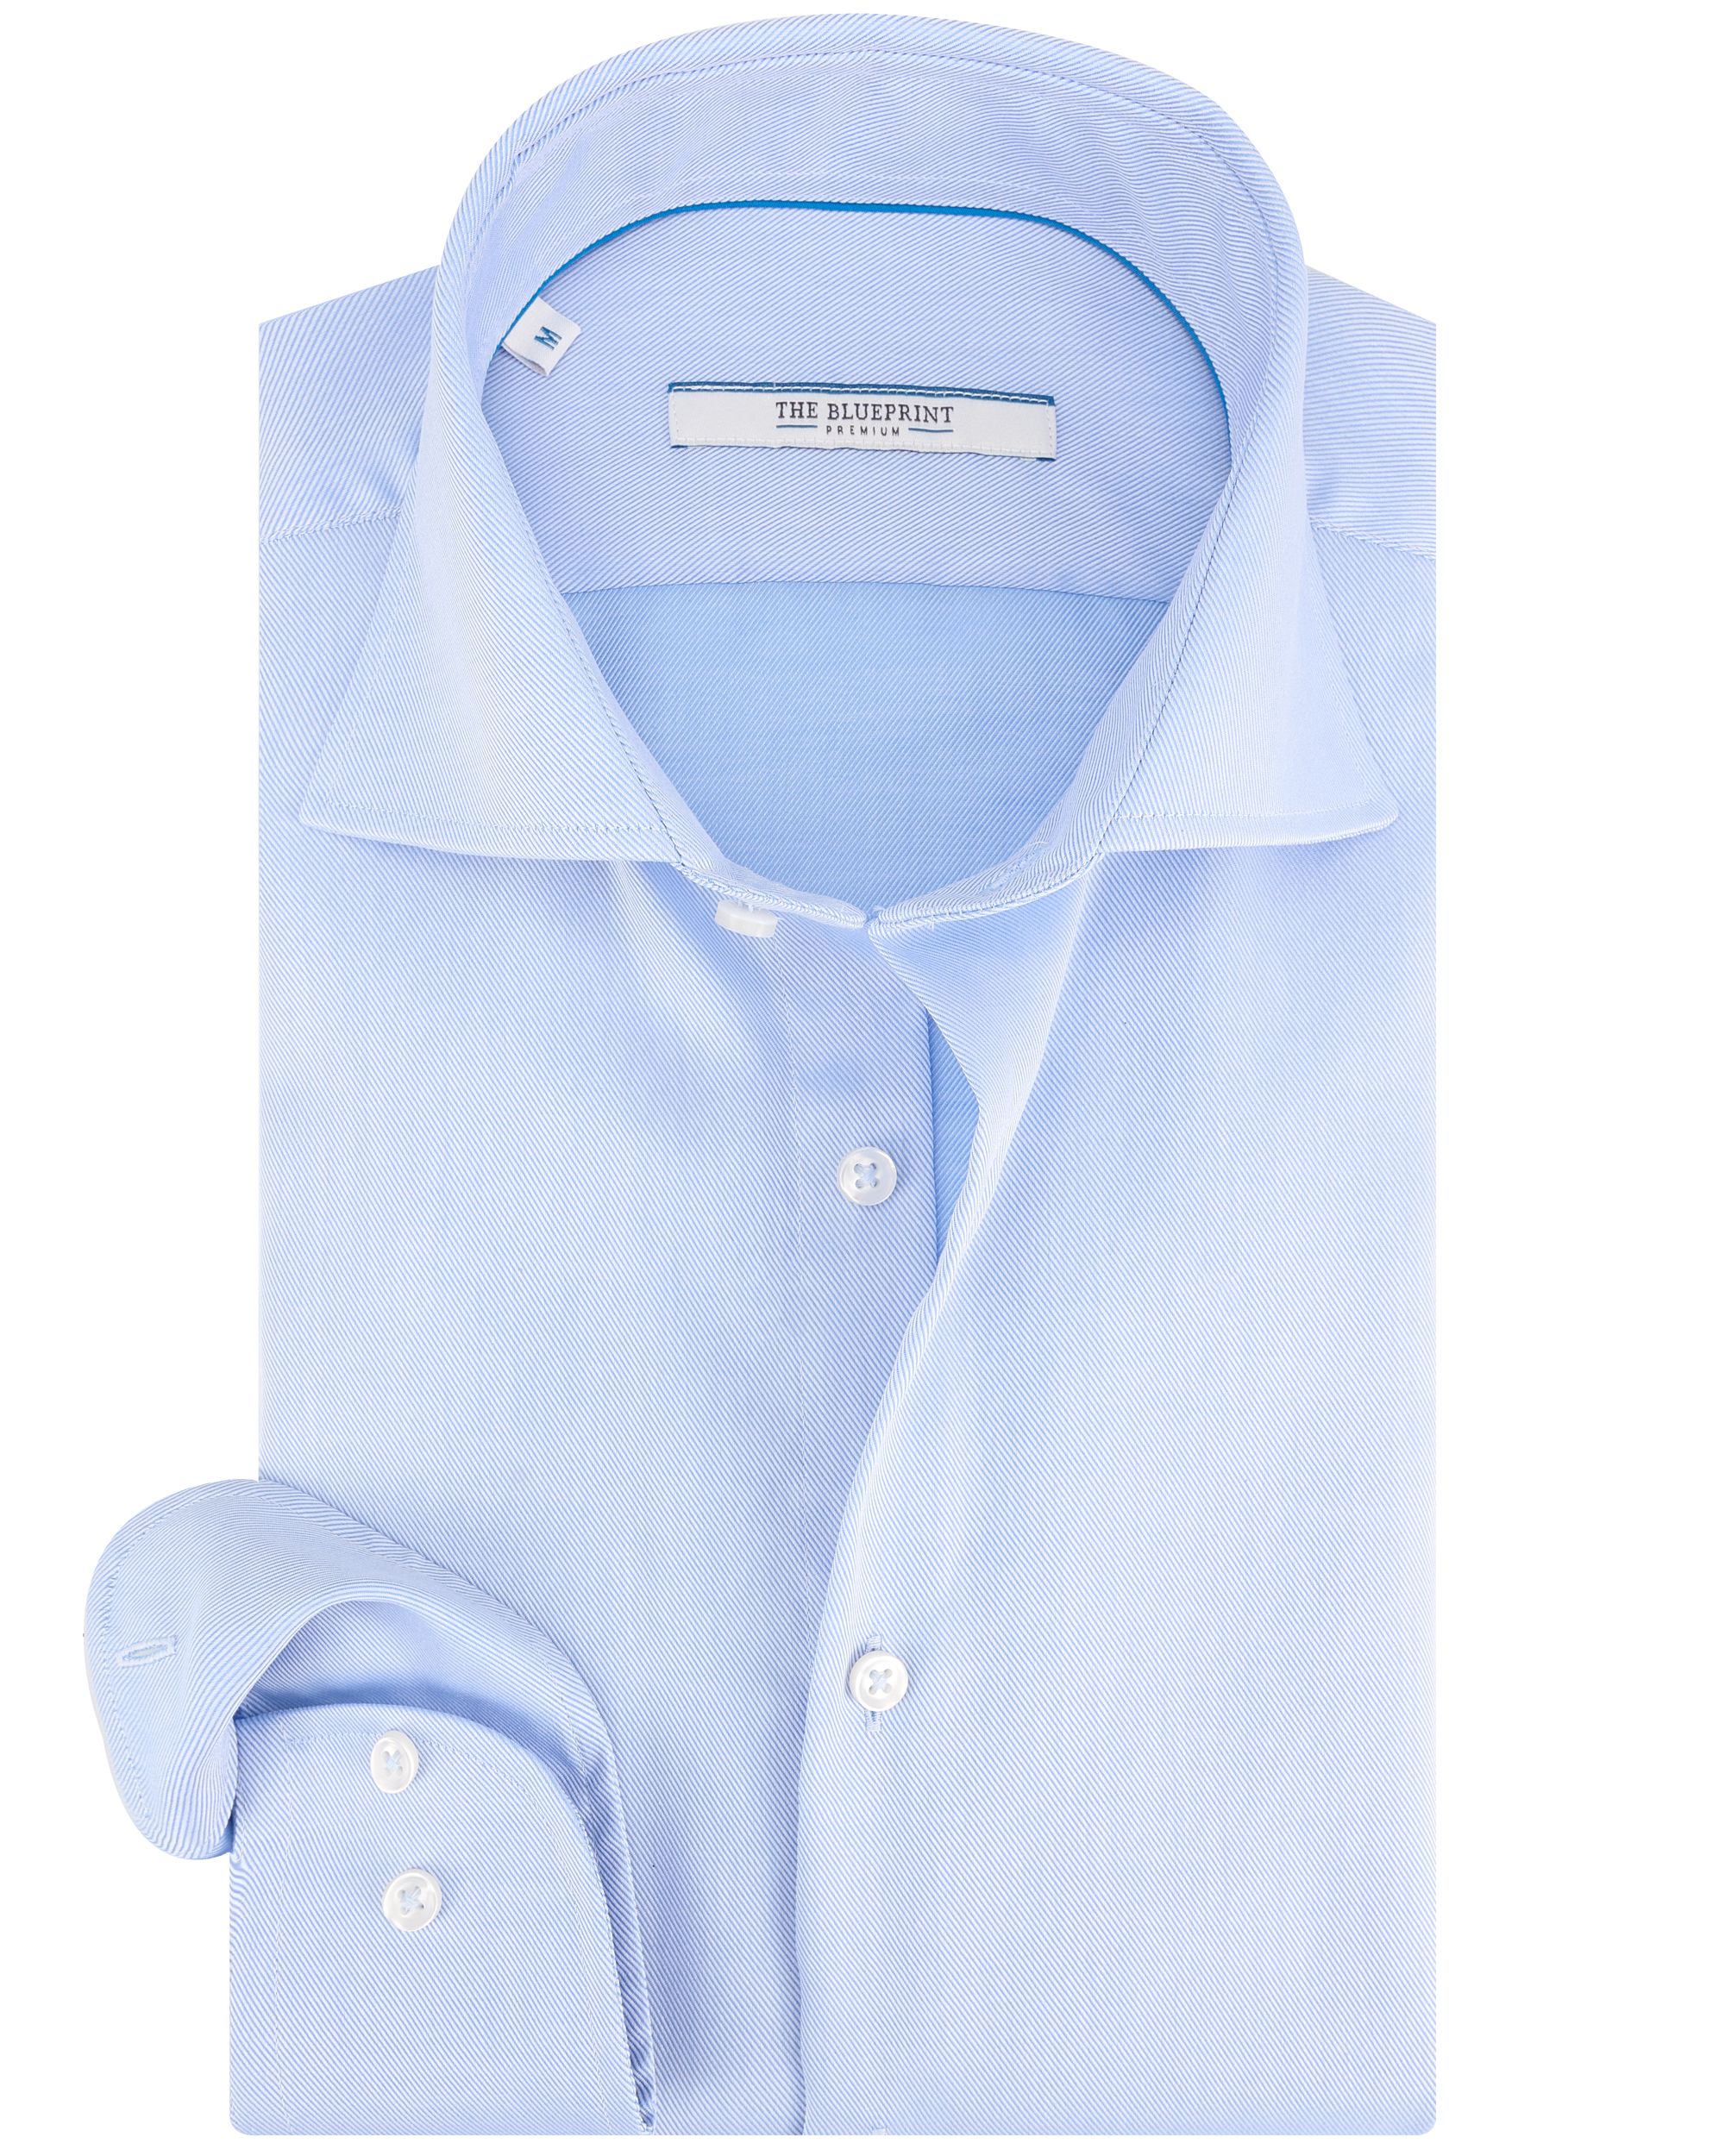 The BLUEPRINT Premium - Trendy Overhemd LM Lichtblauw uni 094219-001-L